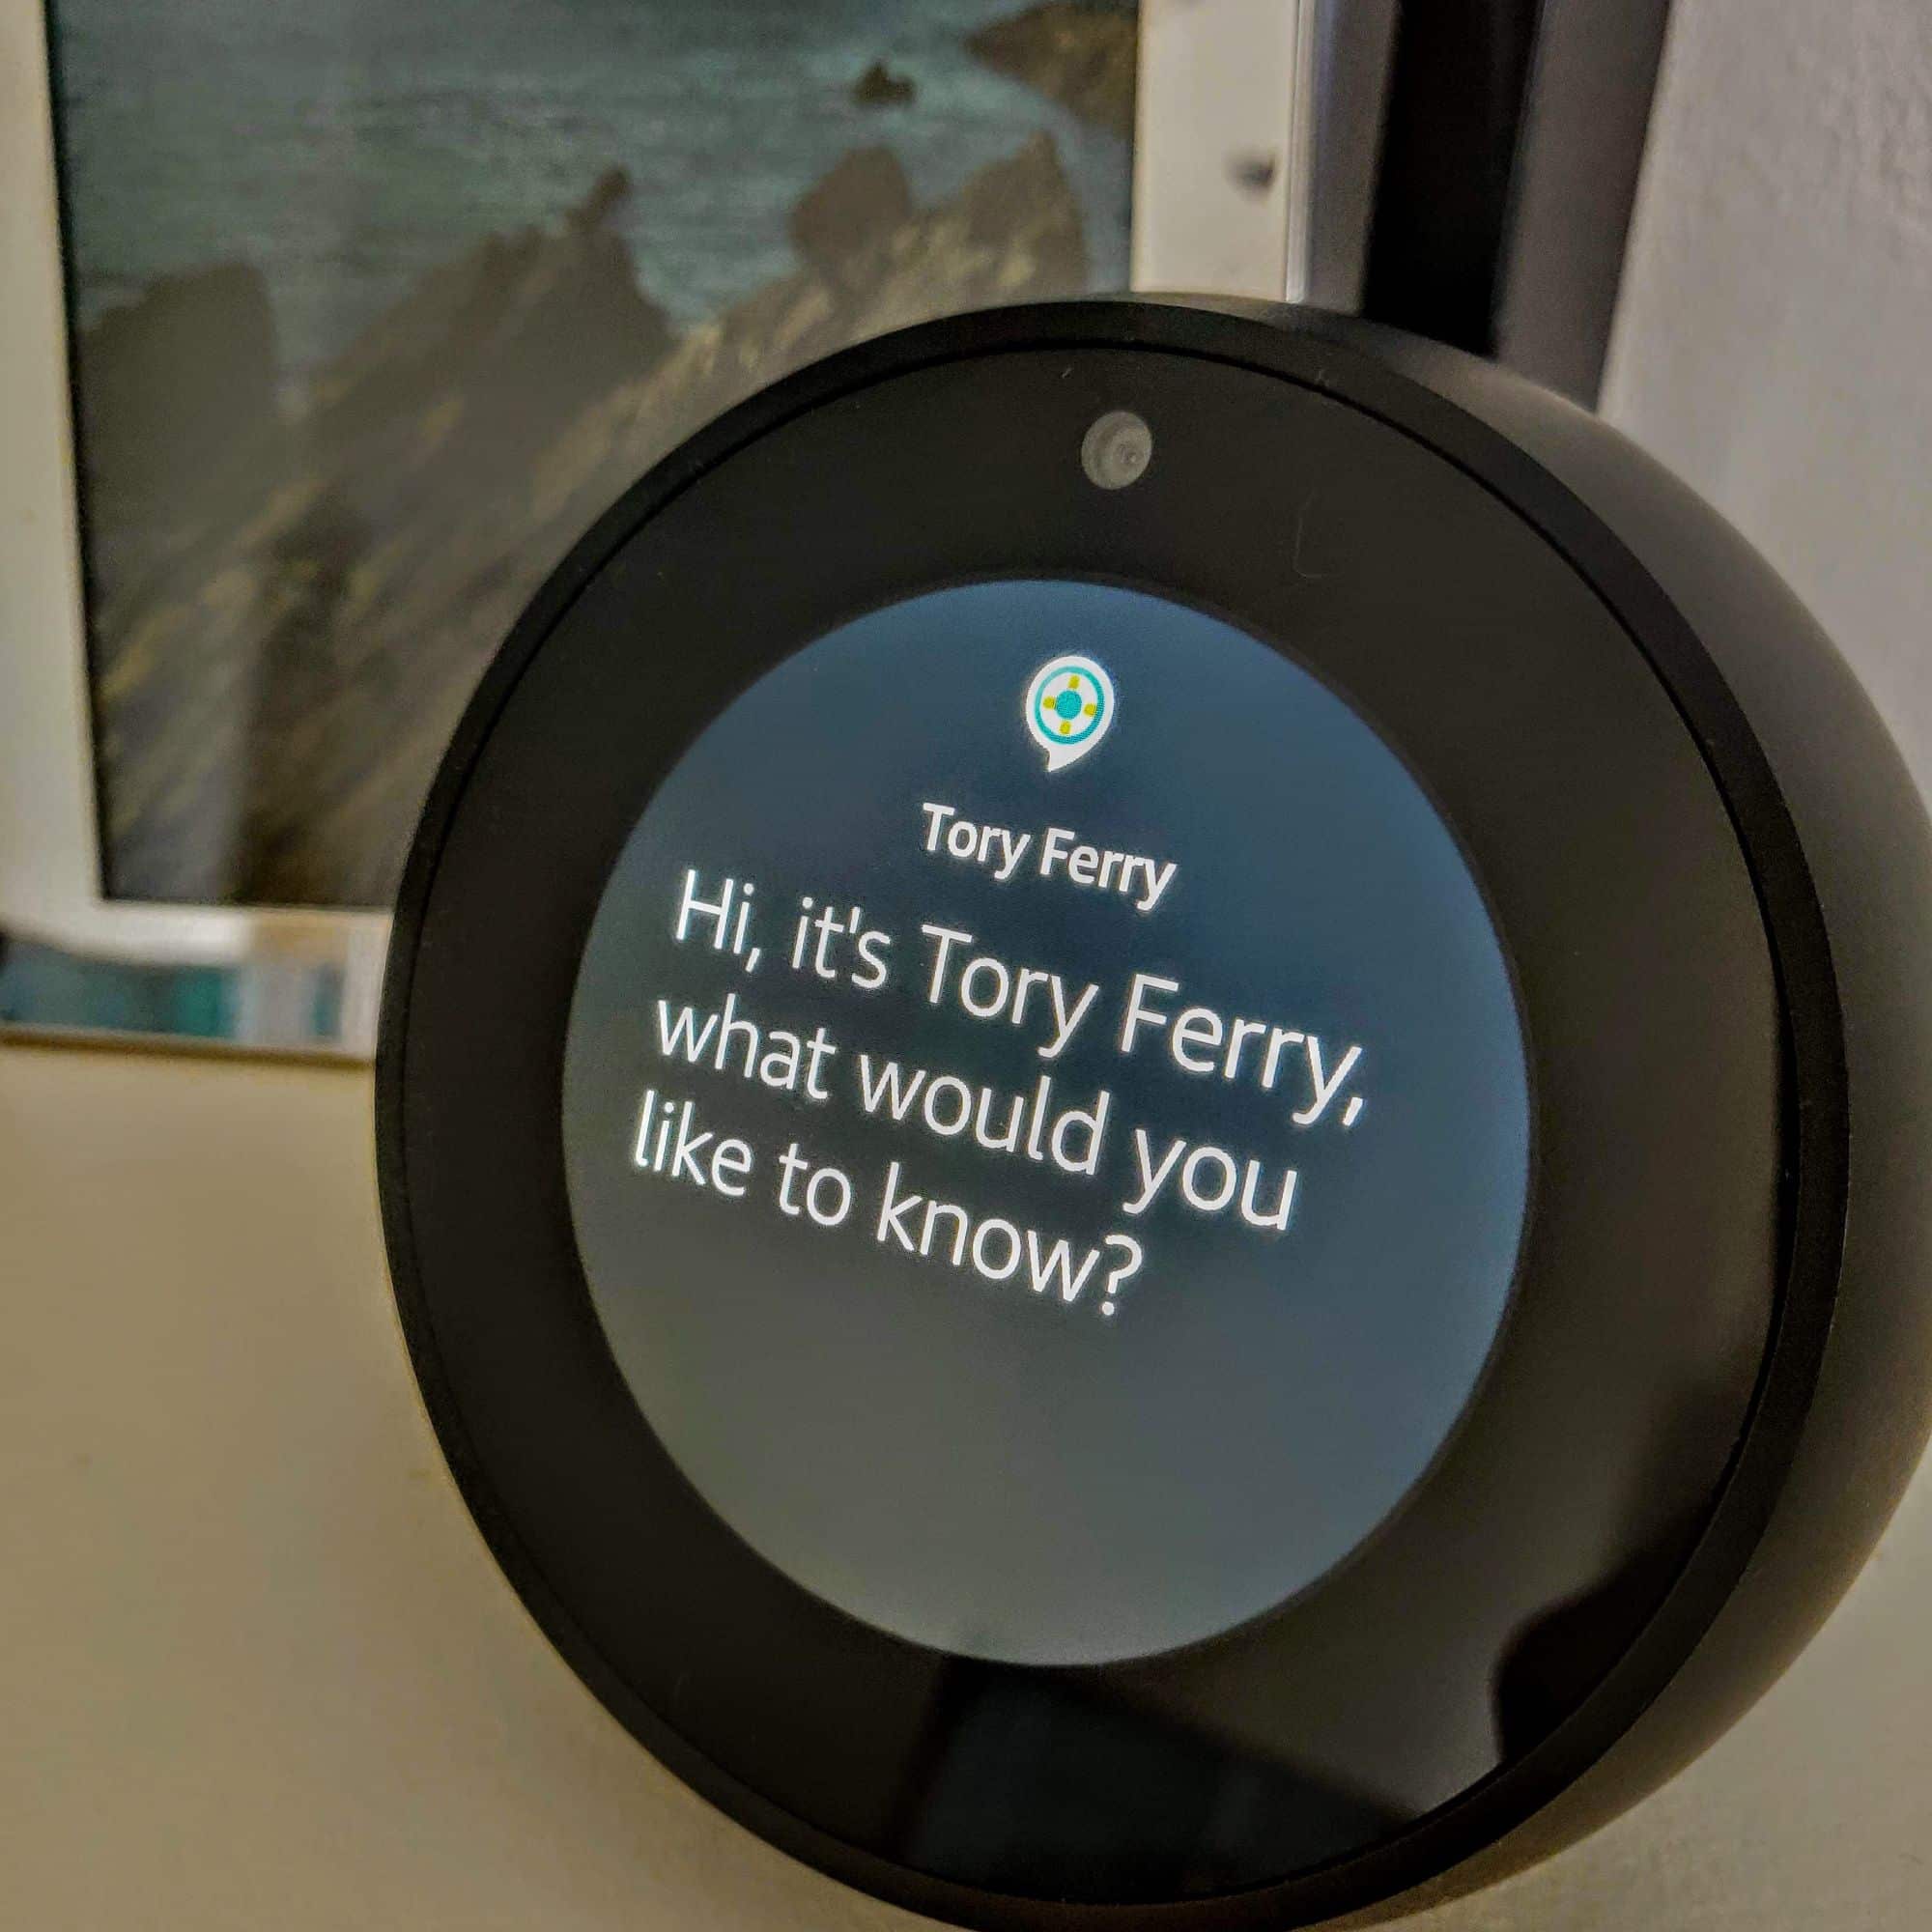 Alexa Spot device with Tory Ferry